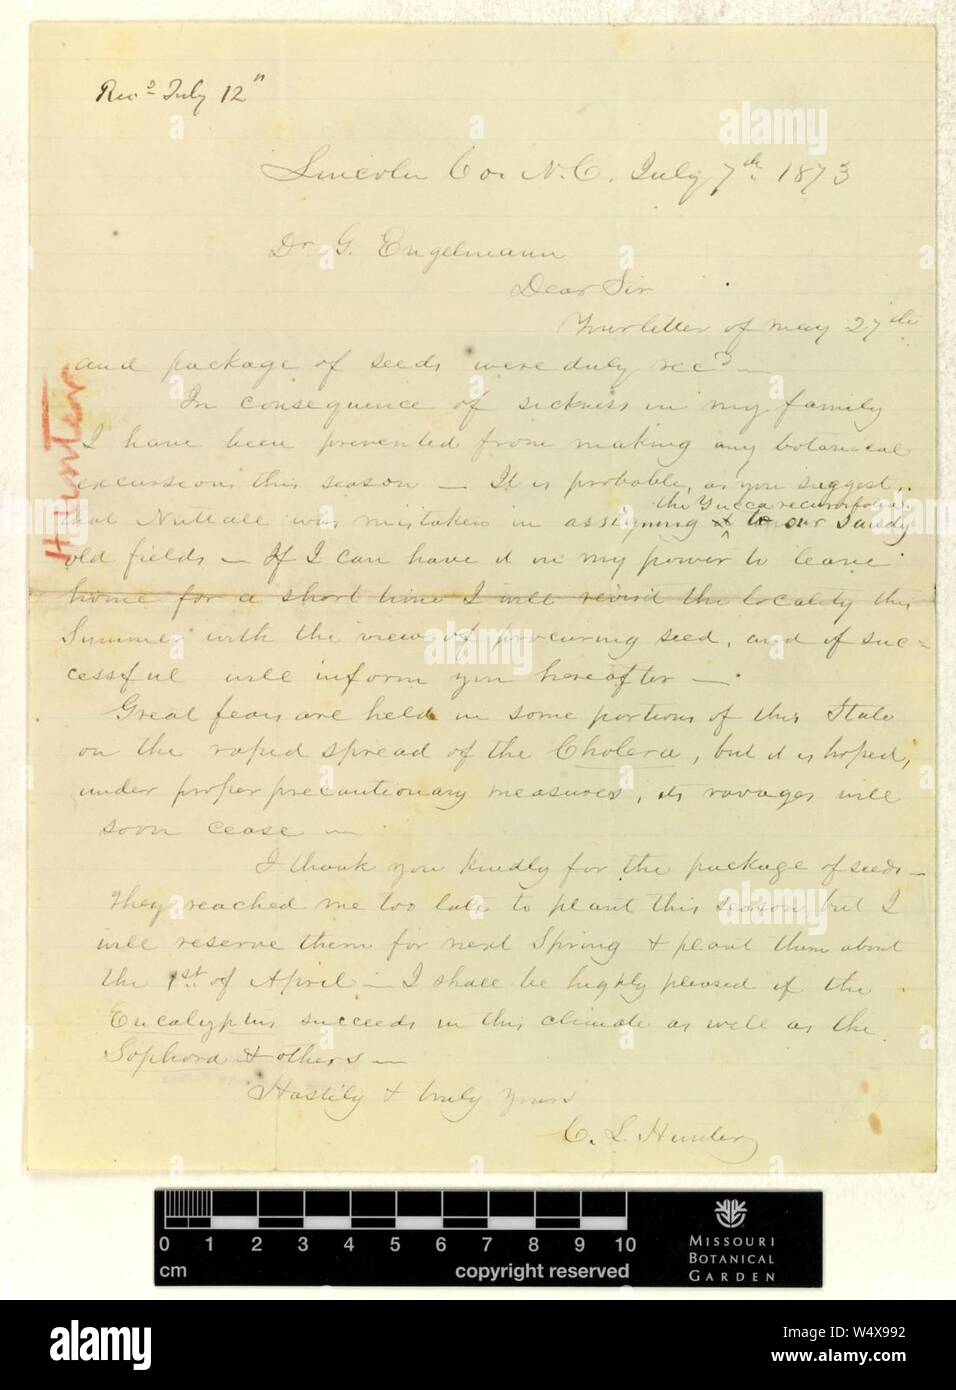 Correspondence - Hunter (Cyrus) and Engelmann (George) (Jul 07, 1873 (1)) Stock Photo